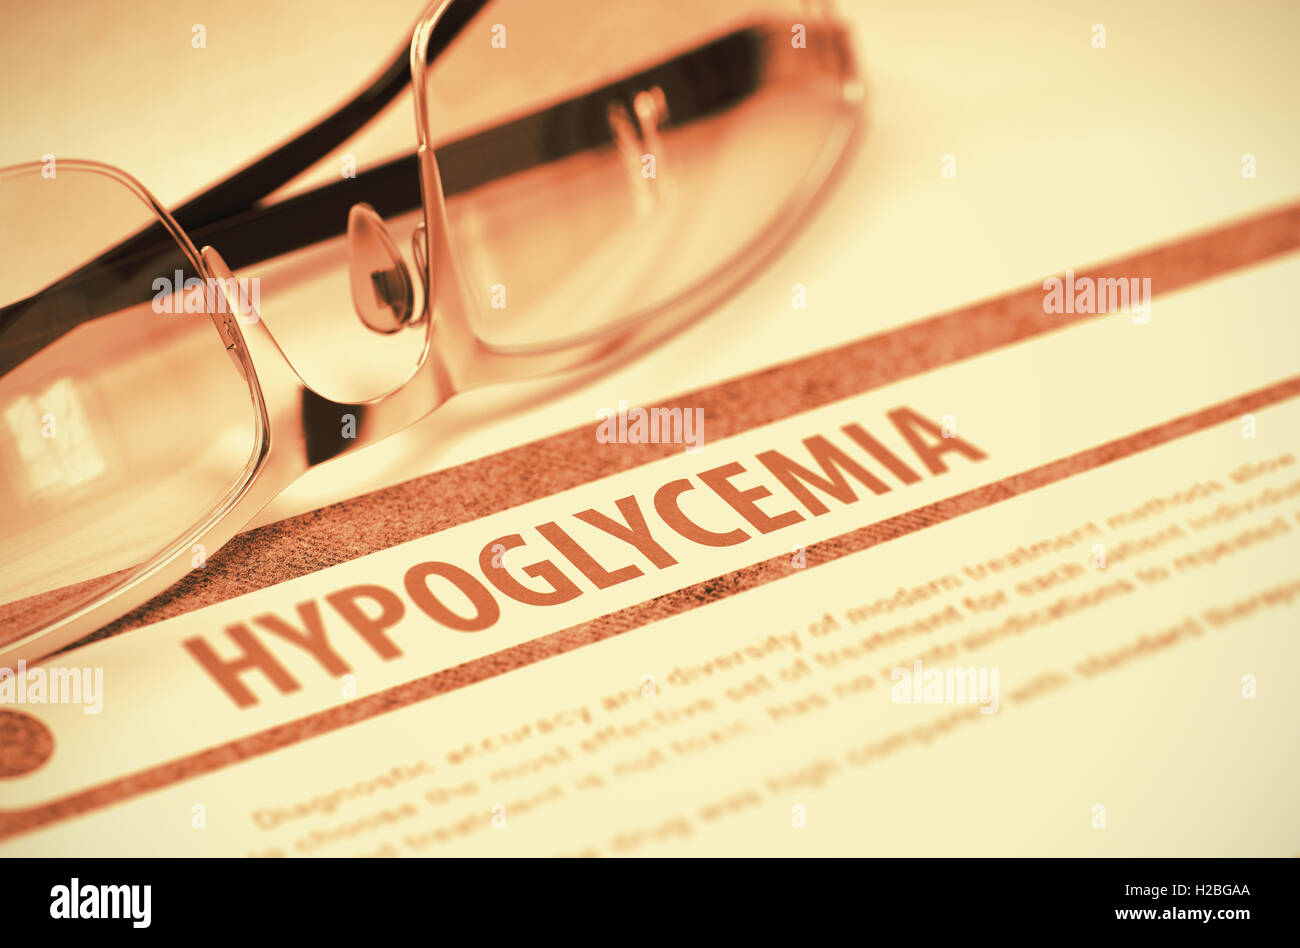 Diagnosis - Hypoglycemia. Medicine Concept. 3D Illustration. Stock Photo